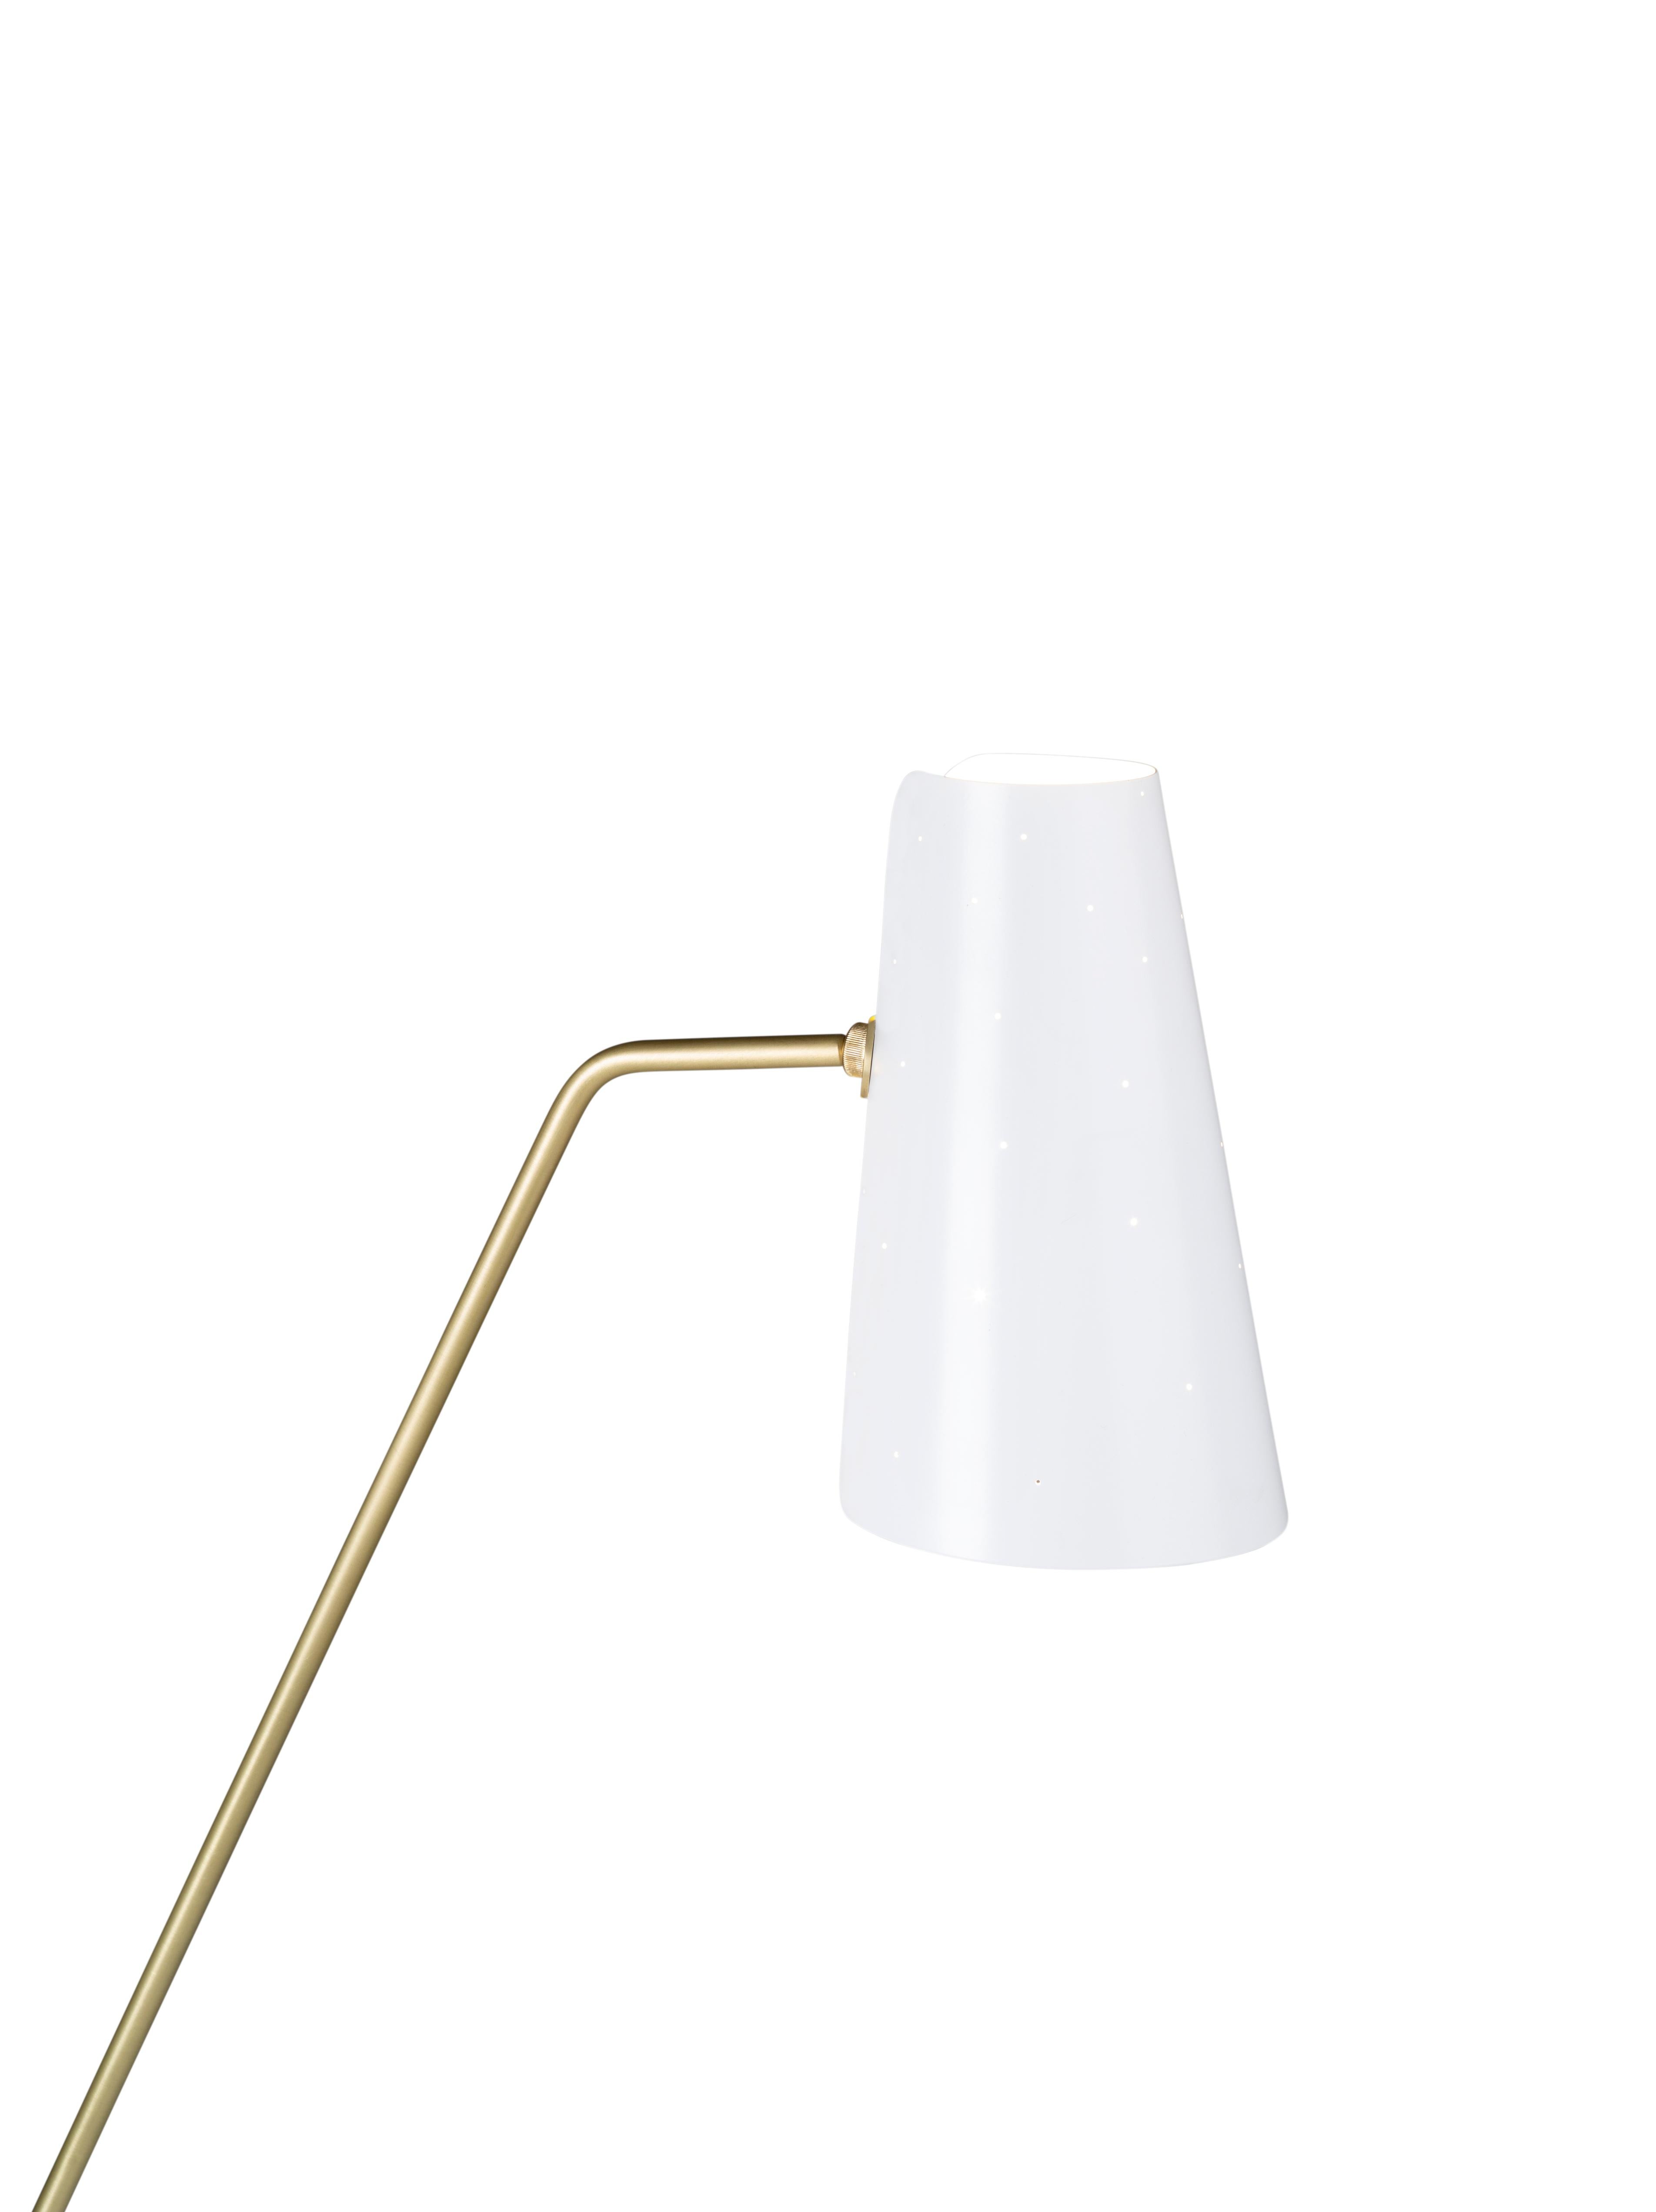 Pierre Guariche 'G21' Adjustable Floor Lamp for Sammode Studio in White For Sale 2